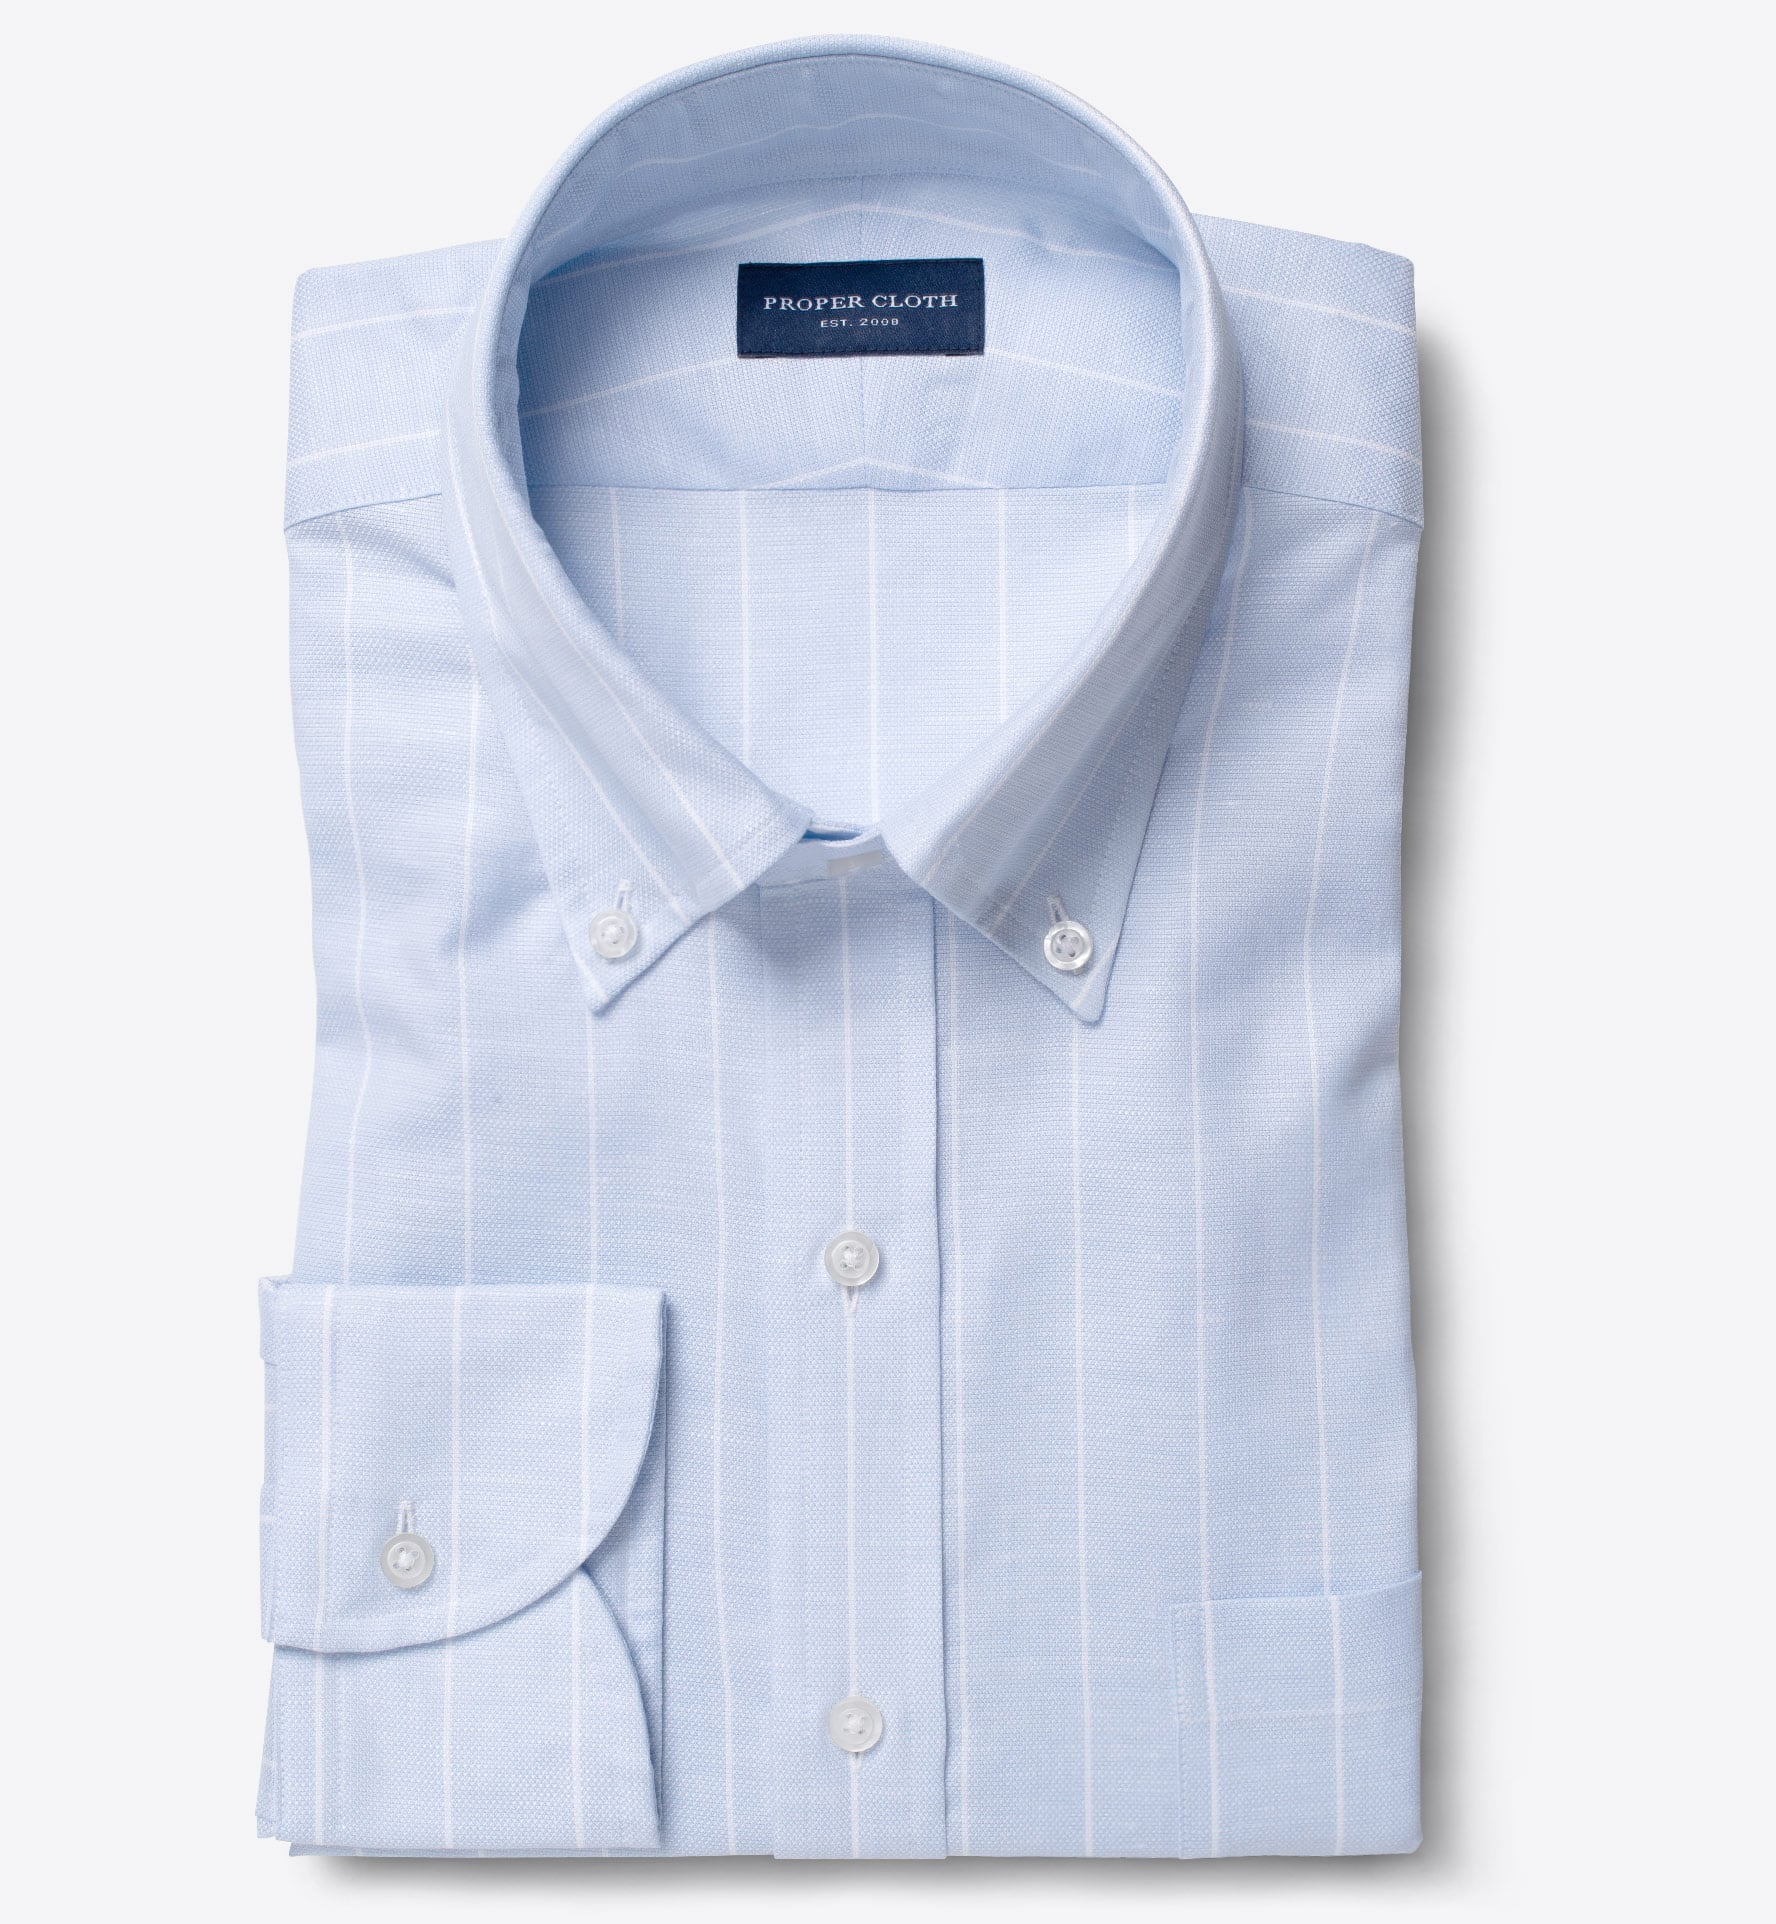 Thomas Mason Light Blue Pinstripe Cotton Linen Dobby Fitted Dress Shirt  Shirt by Proper Cloth